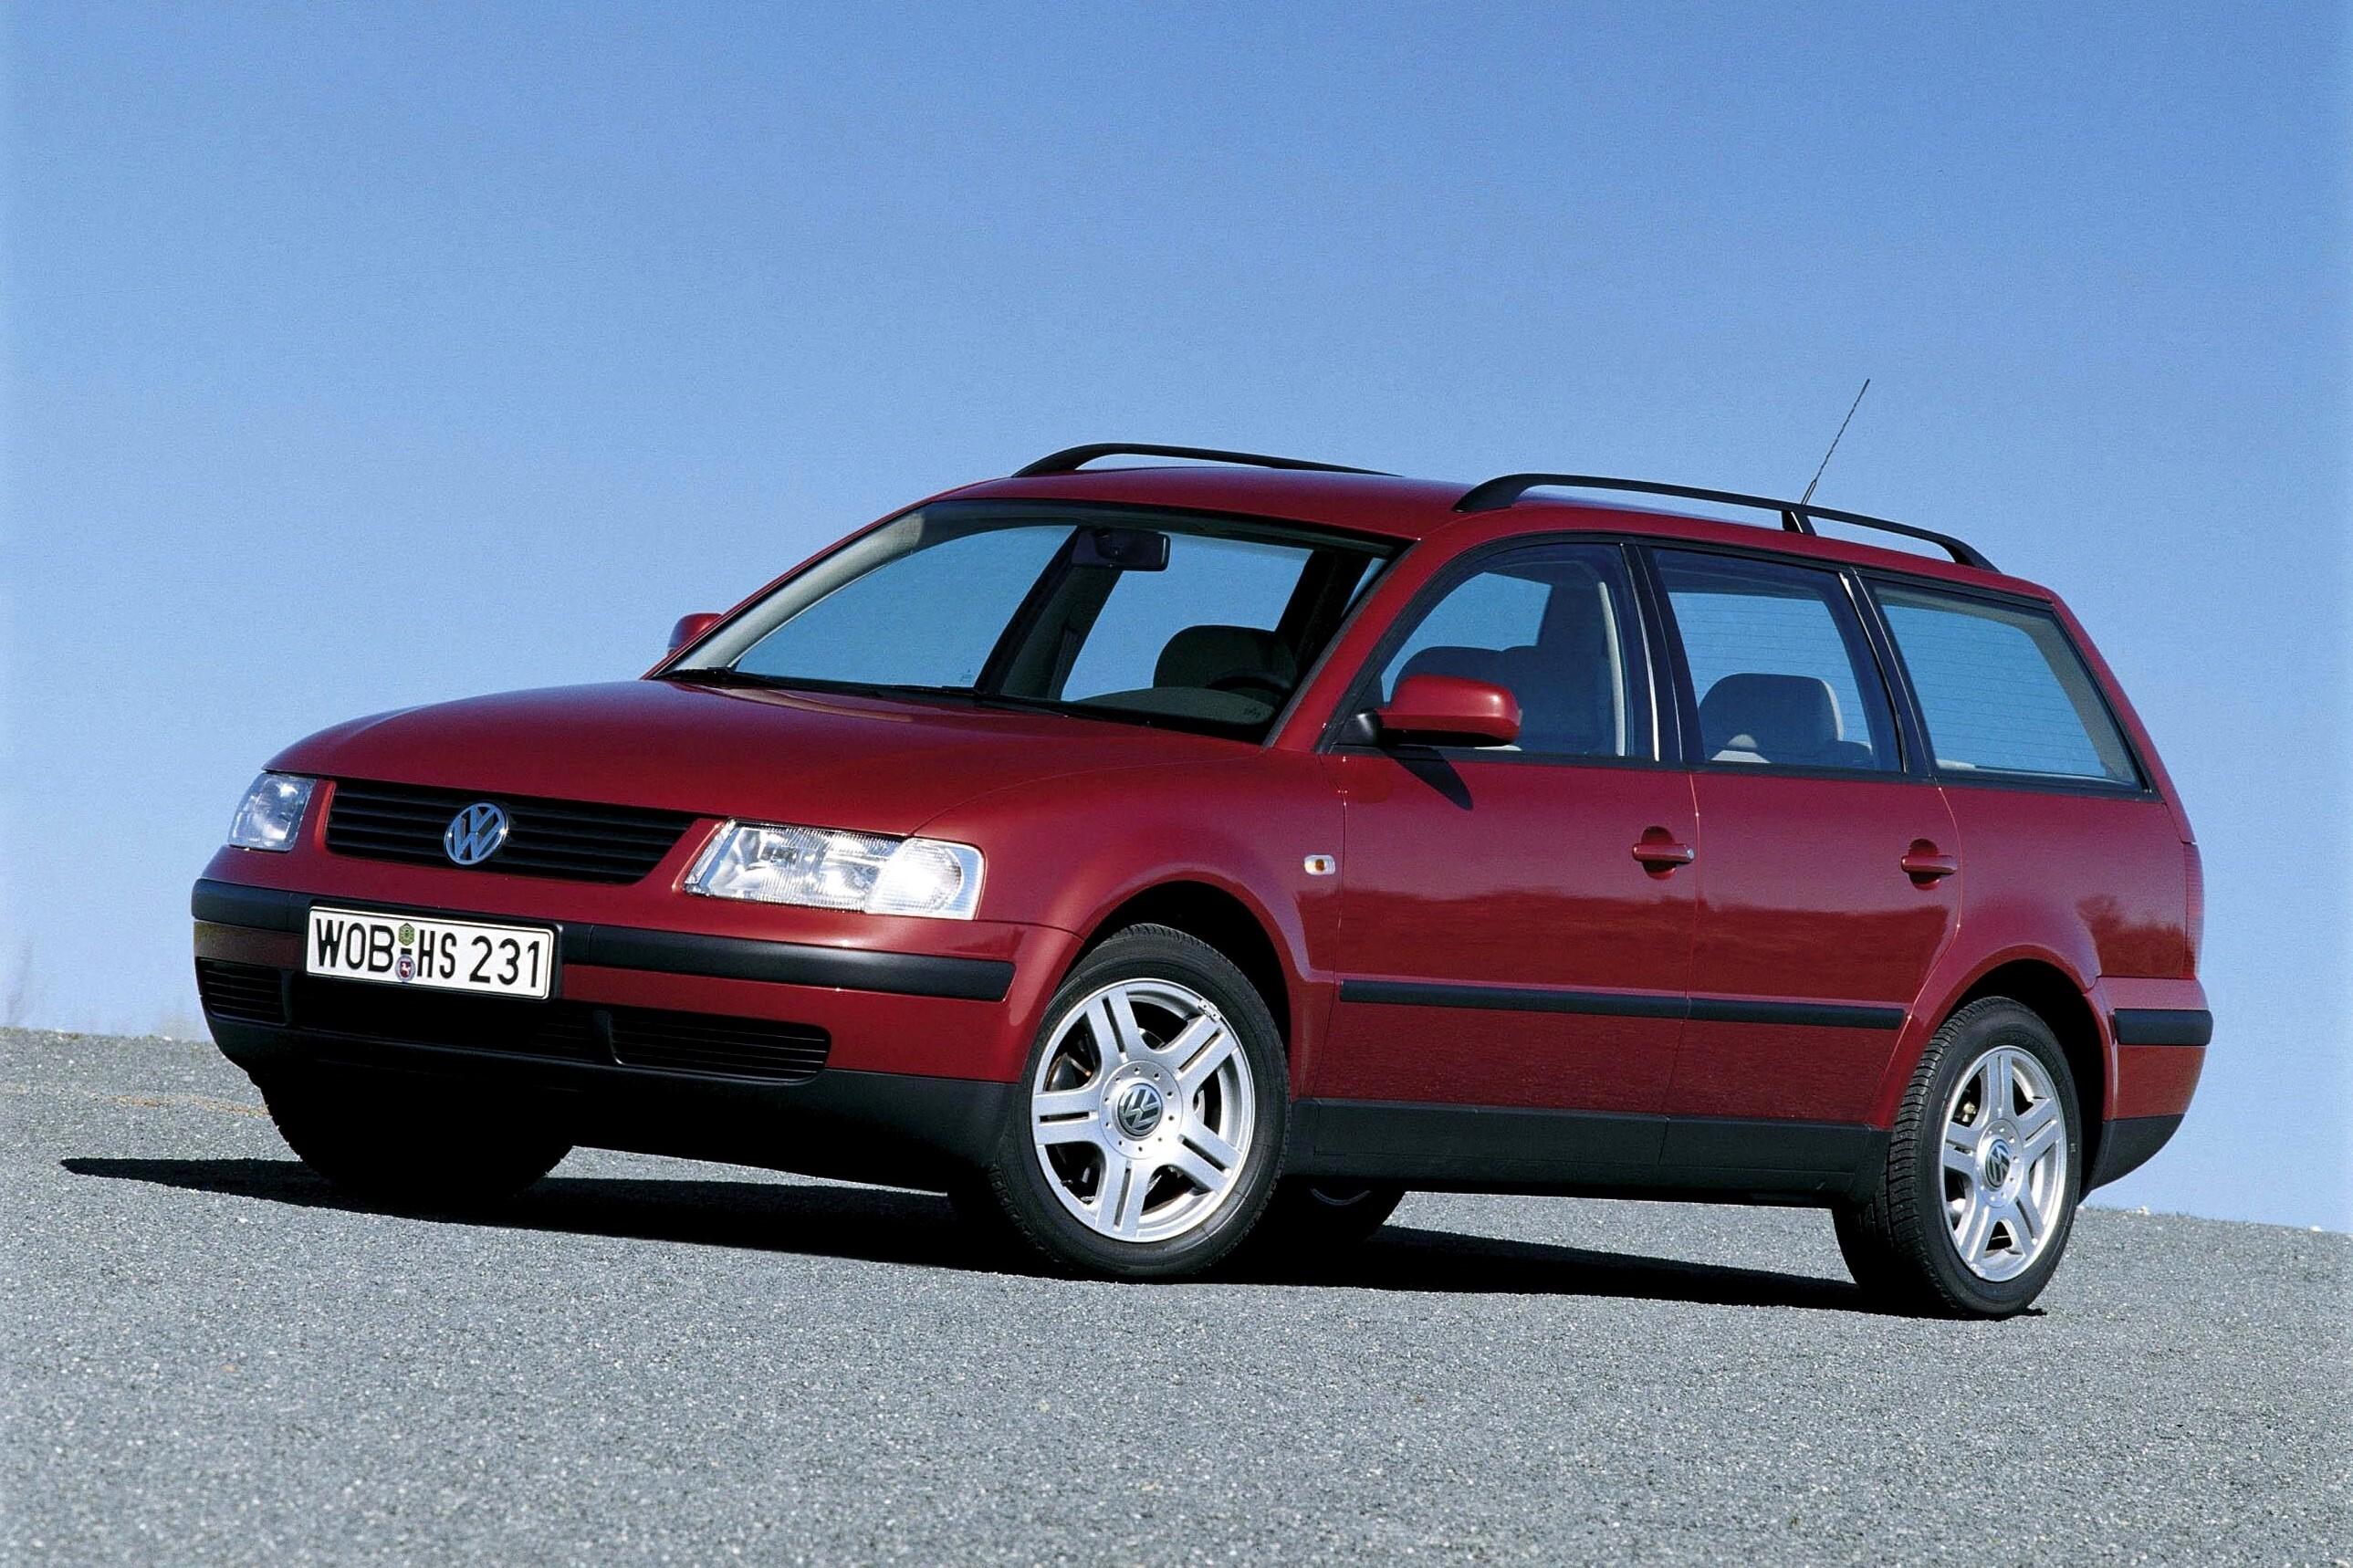 Фольксваген универсал бензин. Volkswagen Passat универсал. Фольц Ваген Пасат универсал. Фольксваген Пассат 1997 универсал. Volkswagen Passat b5 2005 универсал.